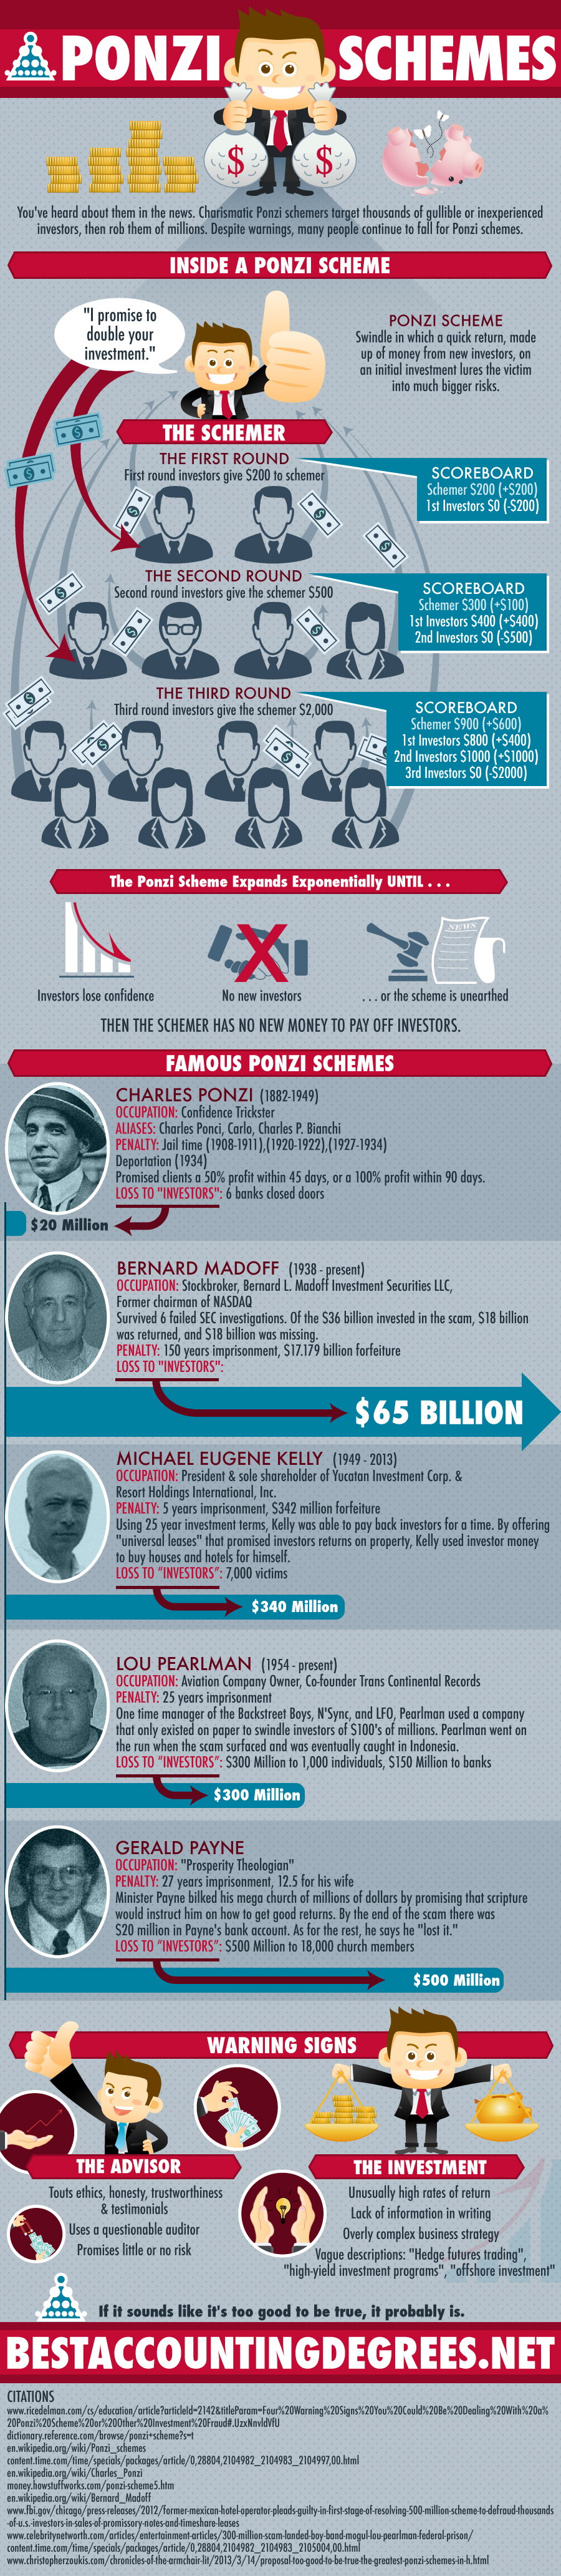 Ponzi-Schemes